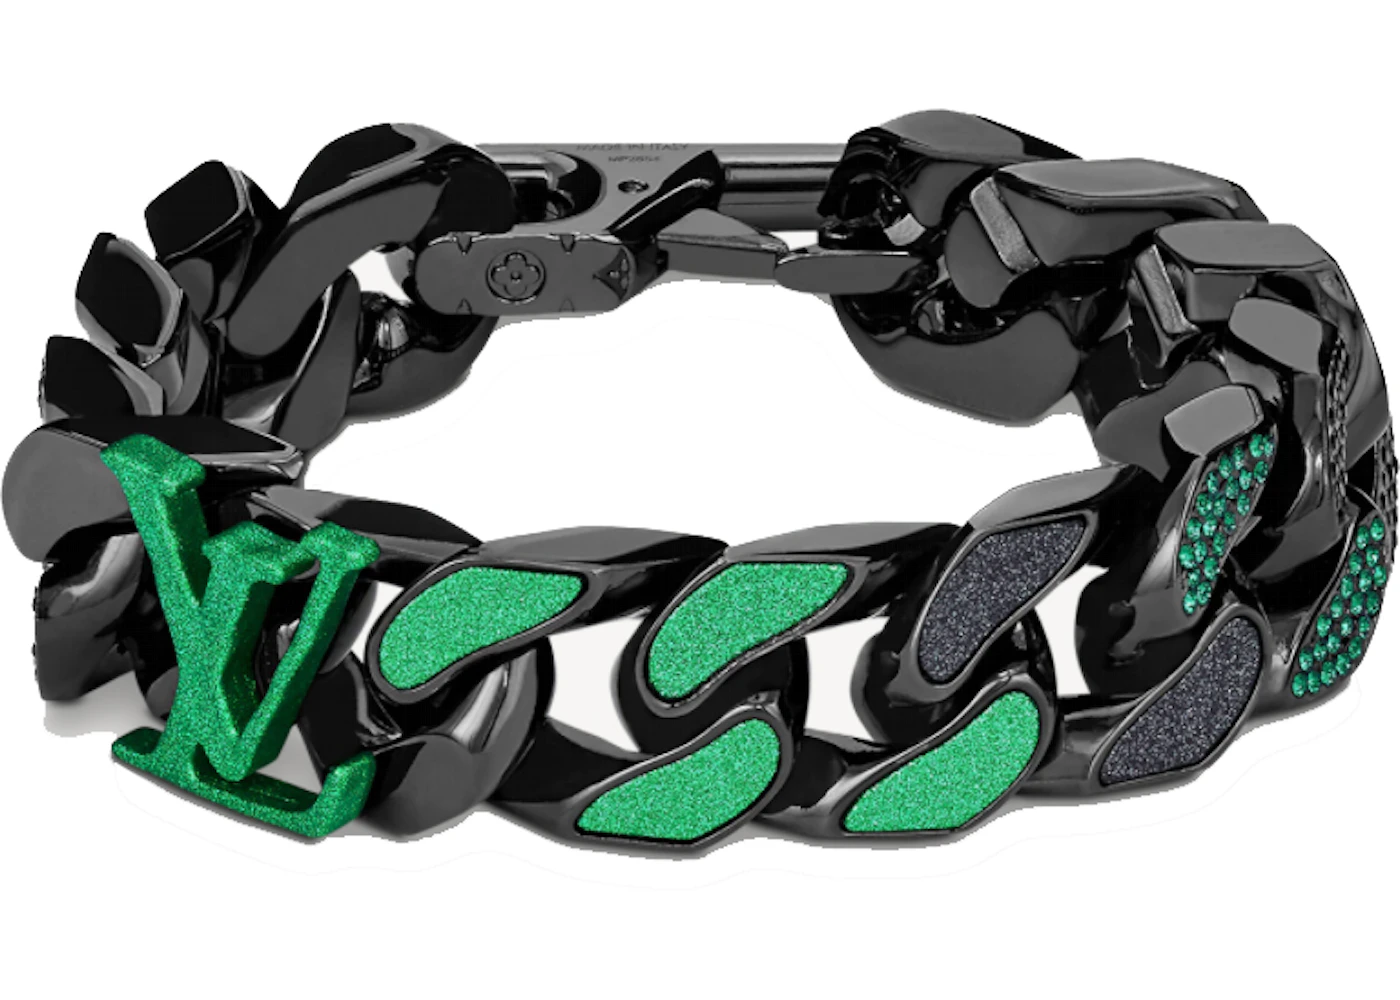 louis vuitton diamond cuban bracelet green and black